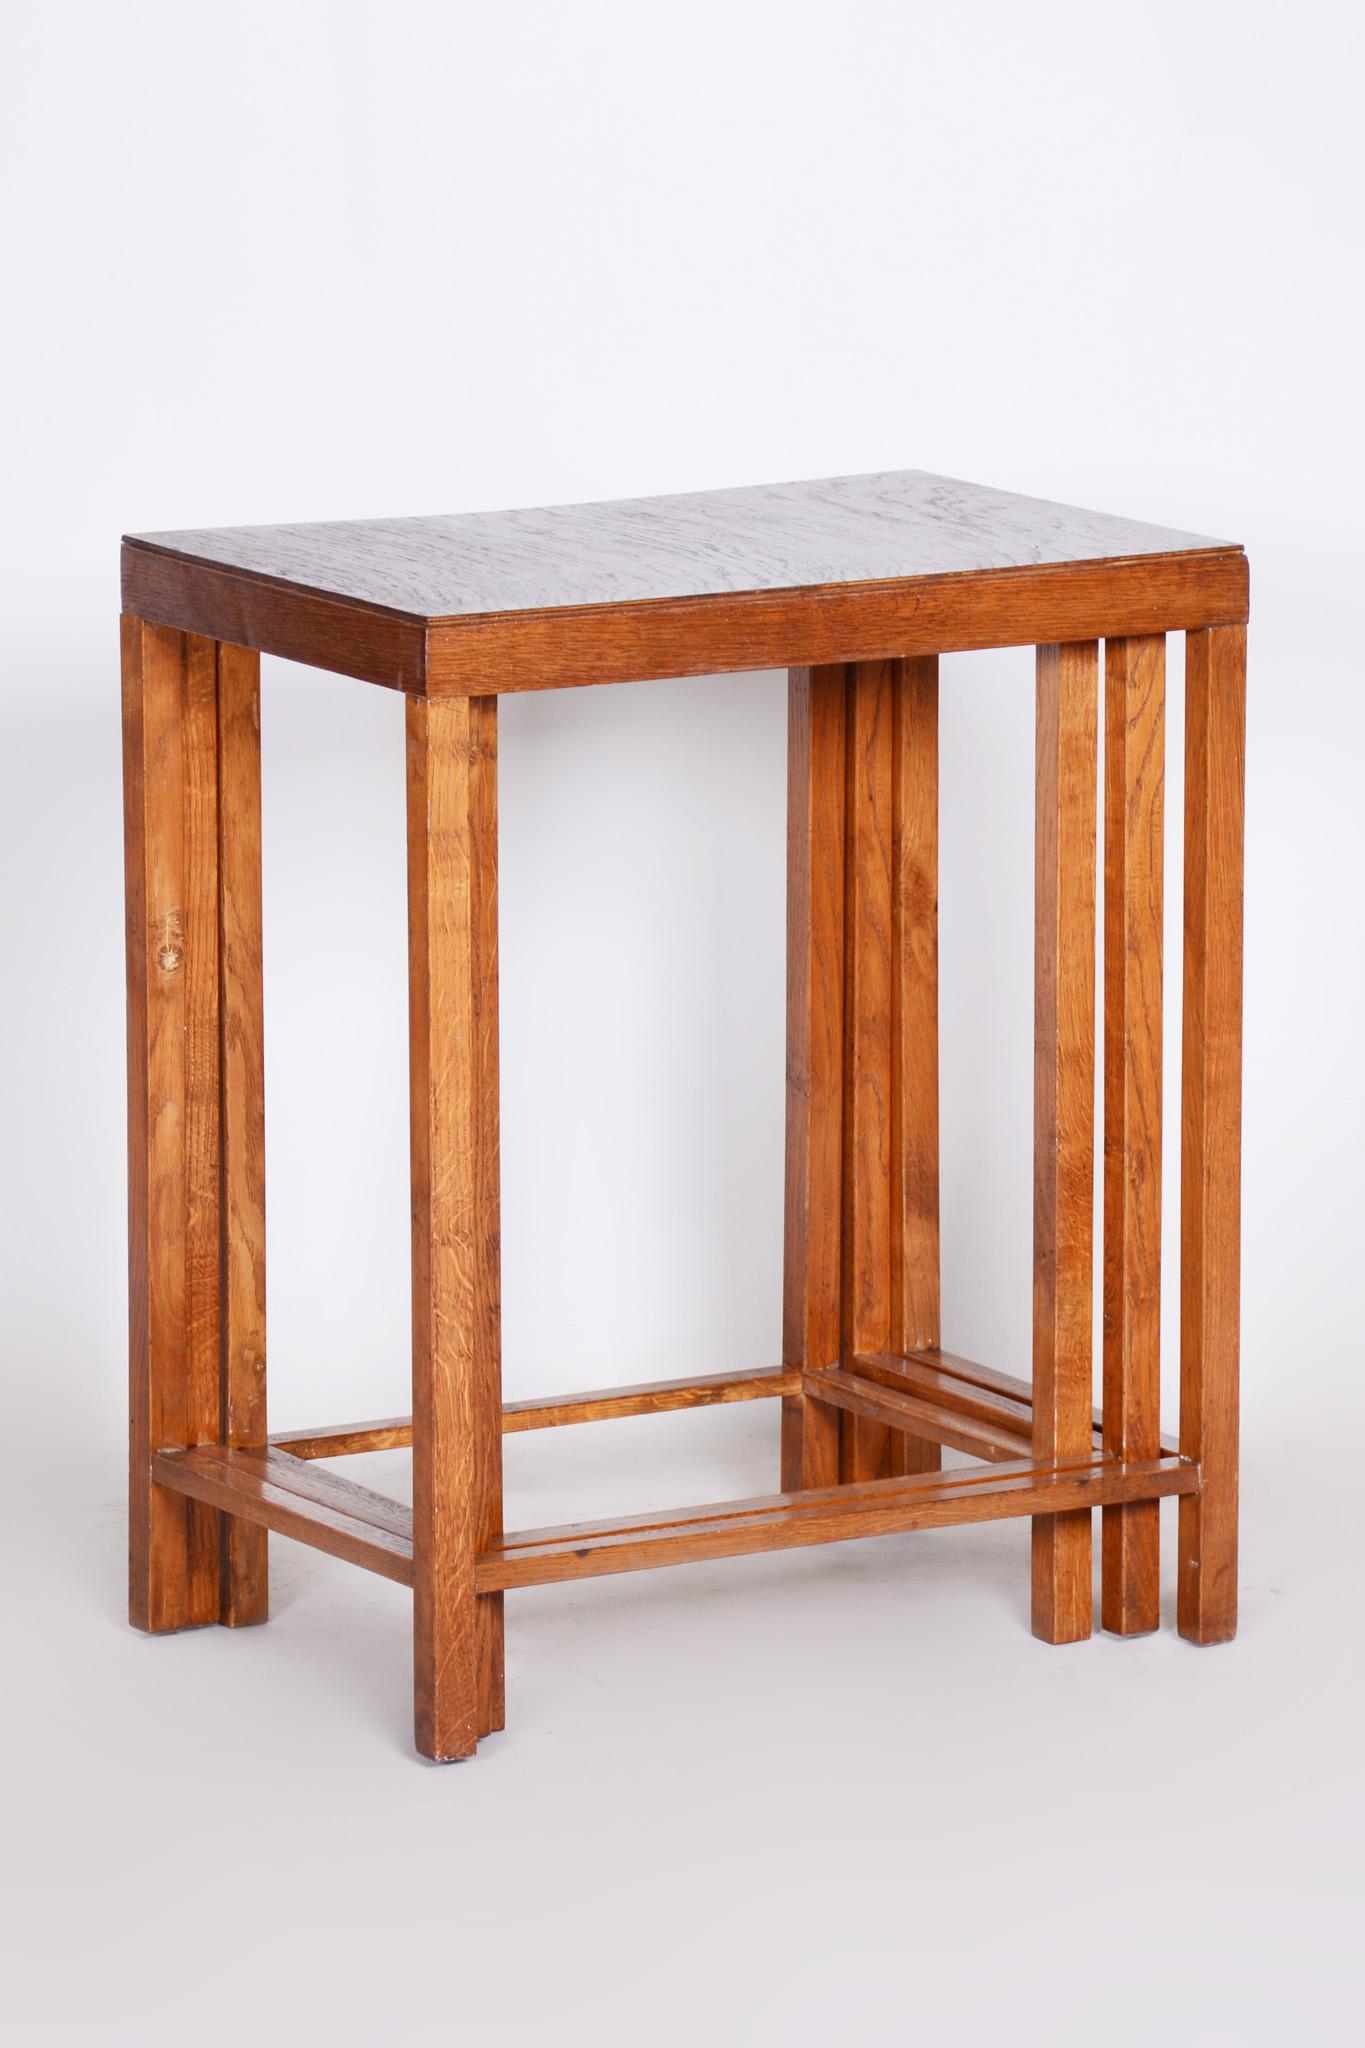 Brown Jan Vanek Nest Tables Made in 1930s Czechia, Art Deco  For Sale 2